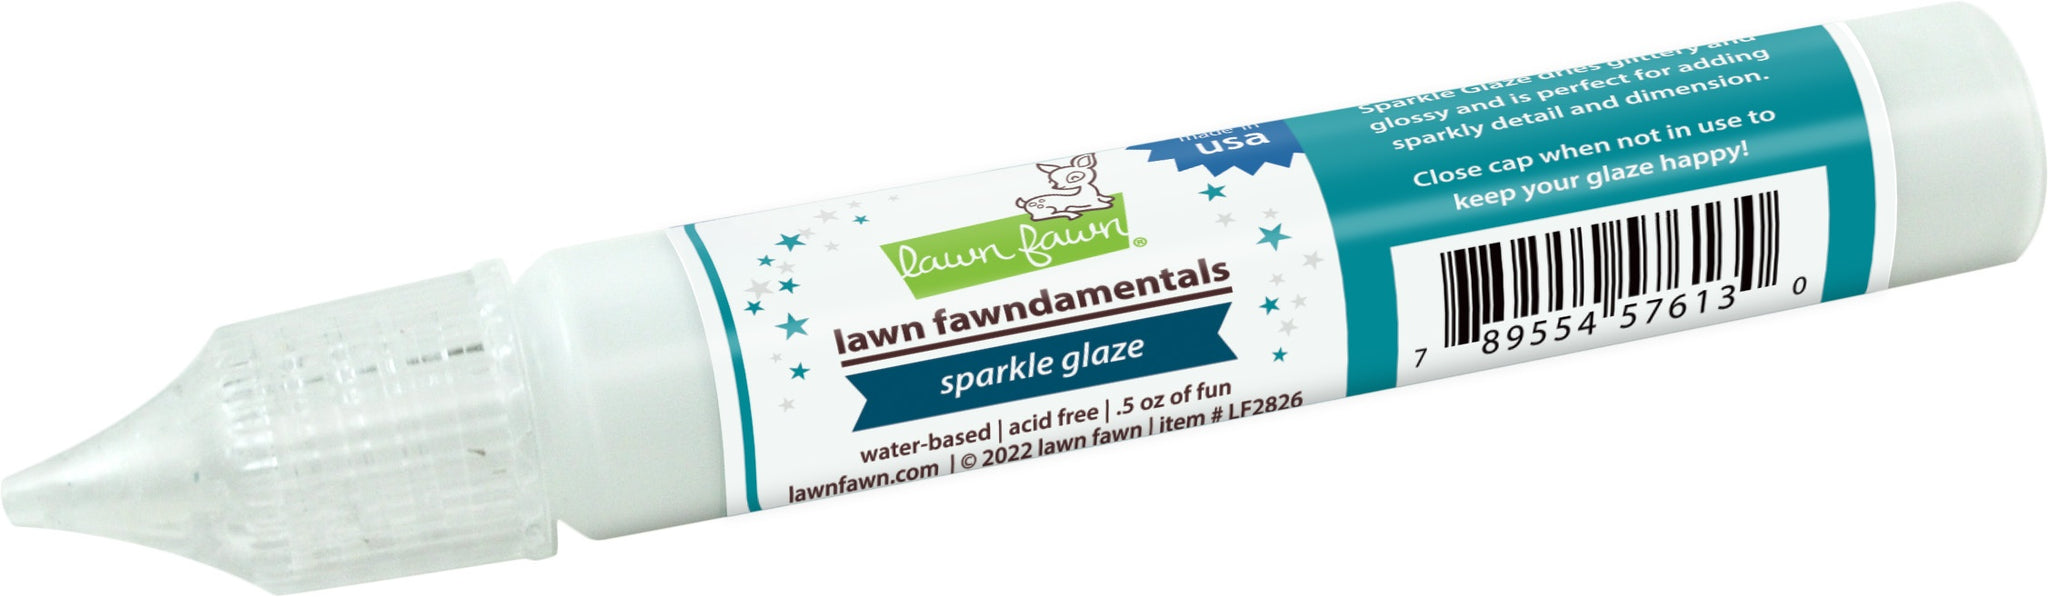 Sparkle Glaze Pen Lawn Fawndamentals